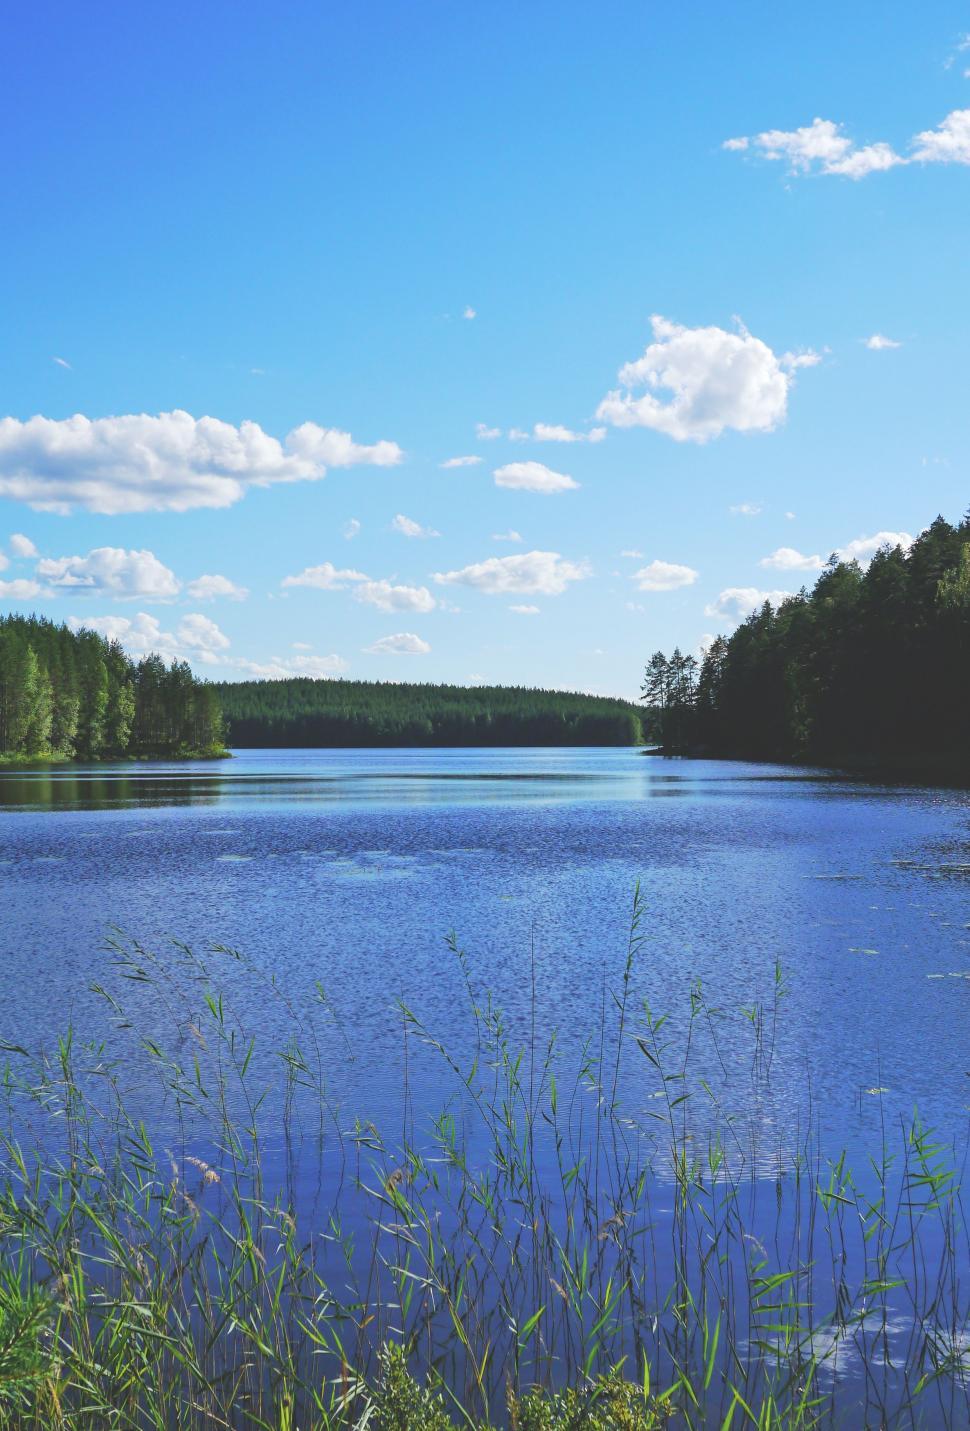 Free Image of Lake with Water Reeds  